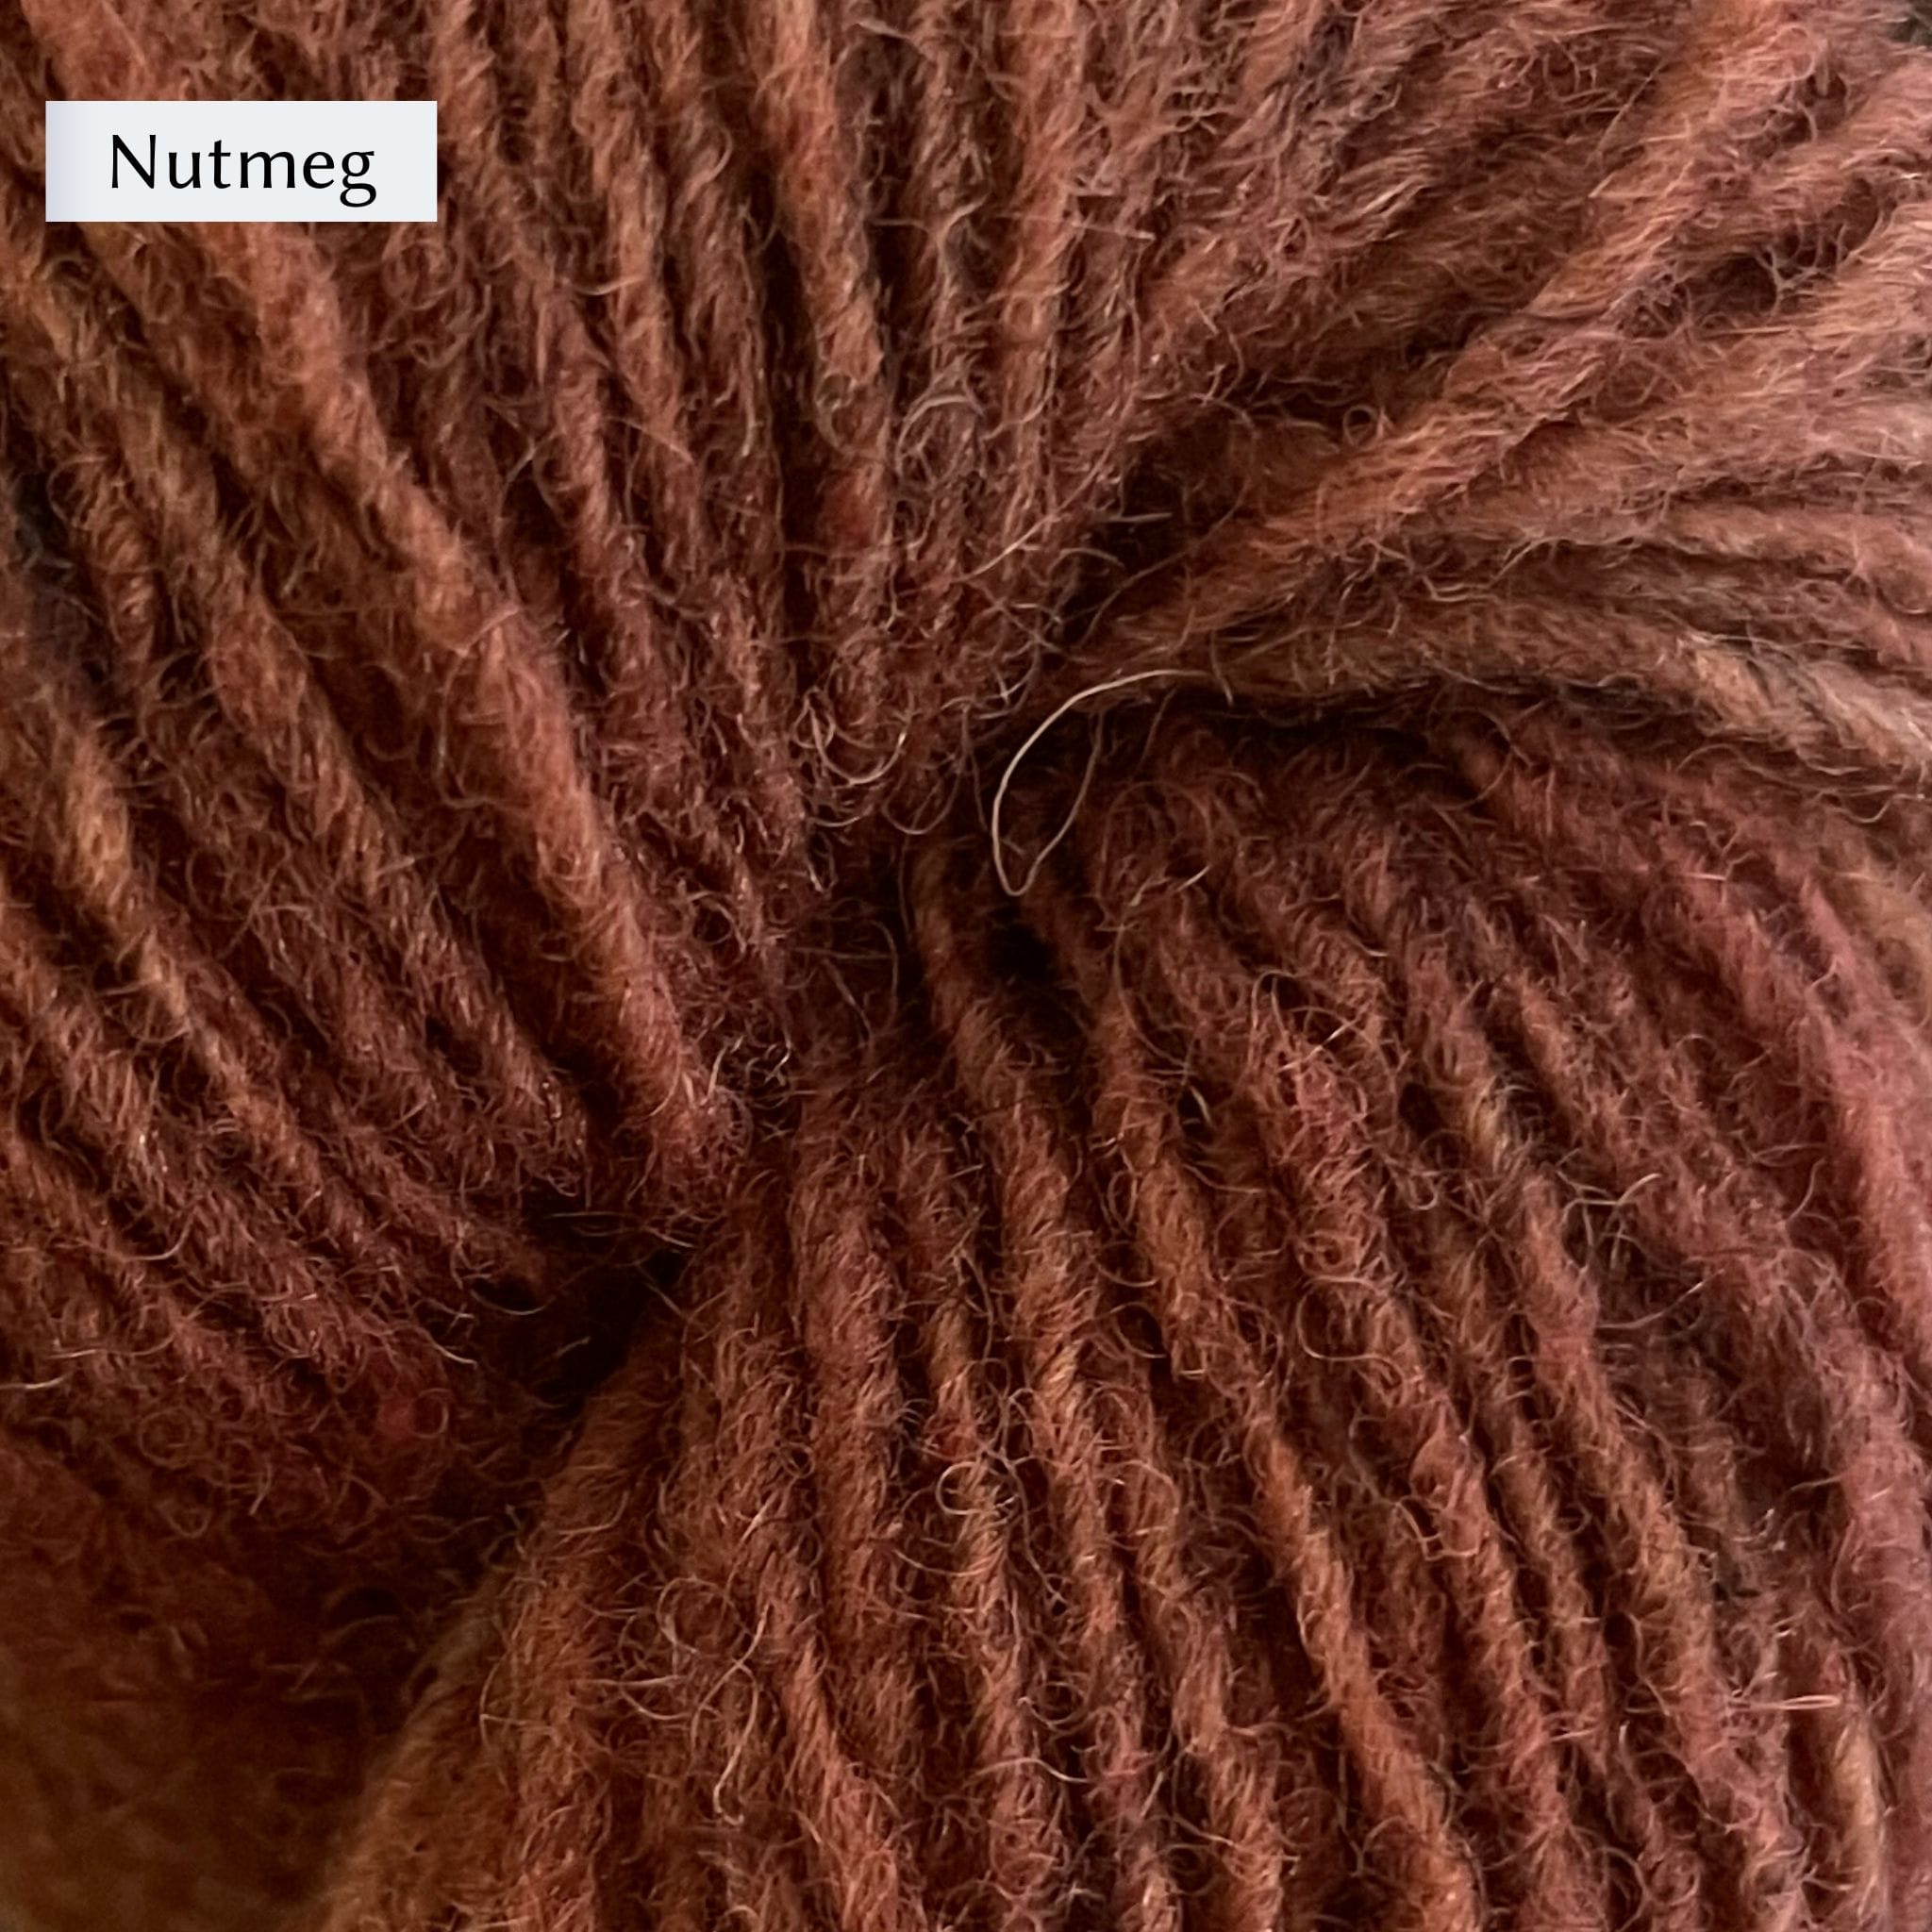 Lichen & Lace Rustic Heather Sport, a sport weight single-ply yarn, a warm medium brown